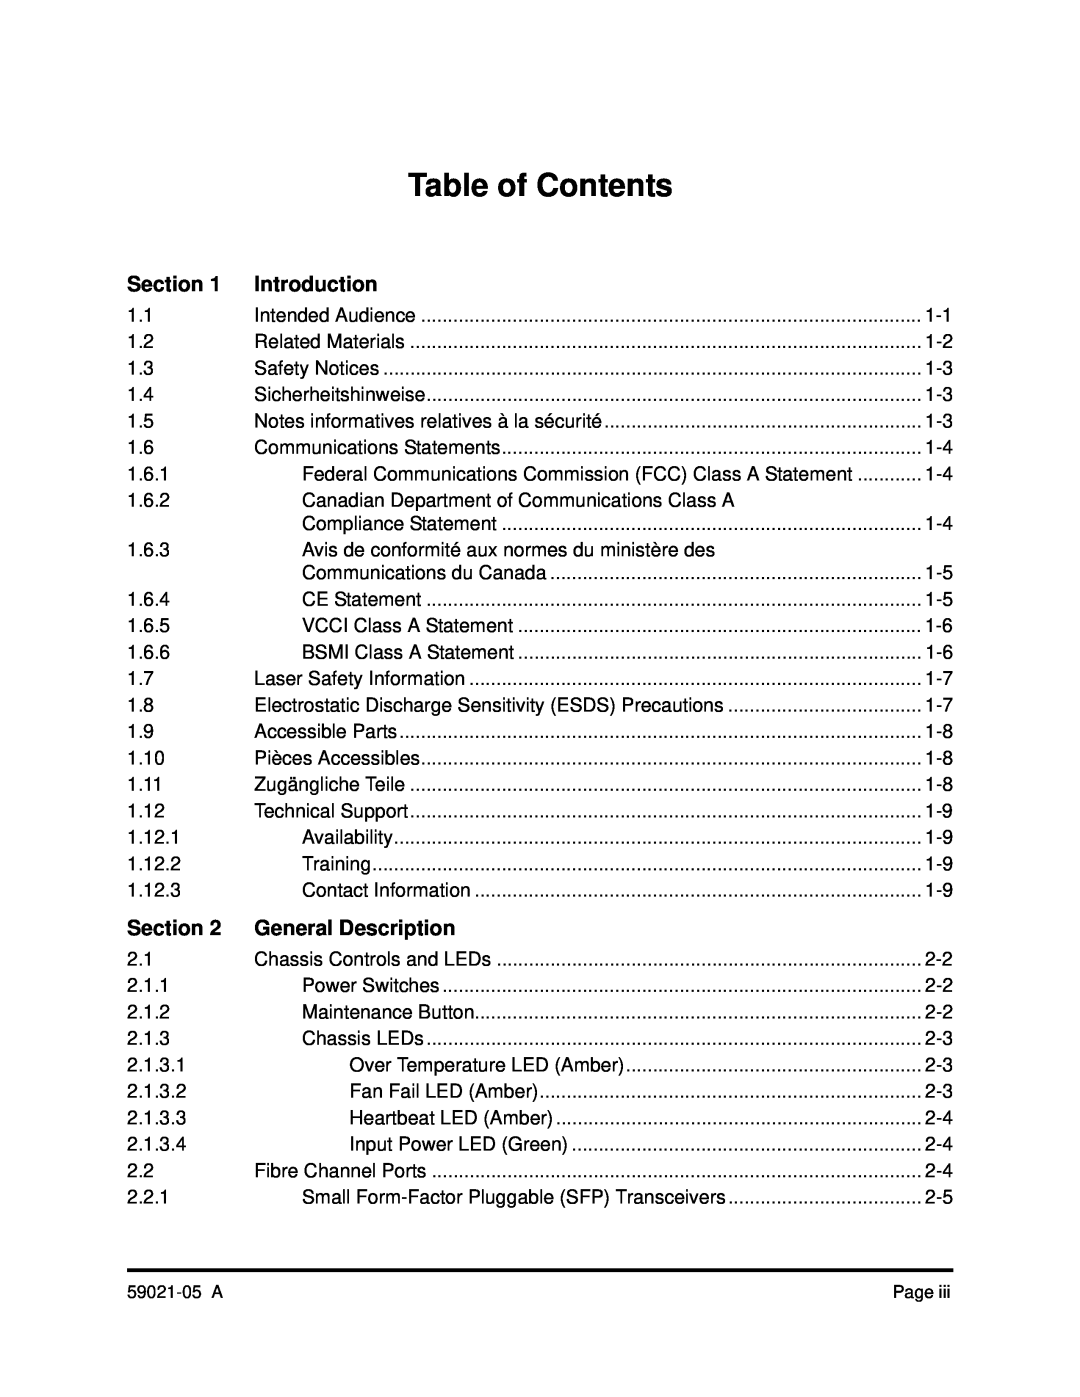 Q-Logic 59021-05 manual Section, Introduction, General Description, Table of Contents 